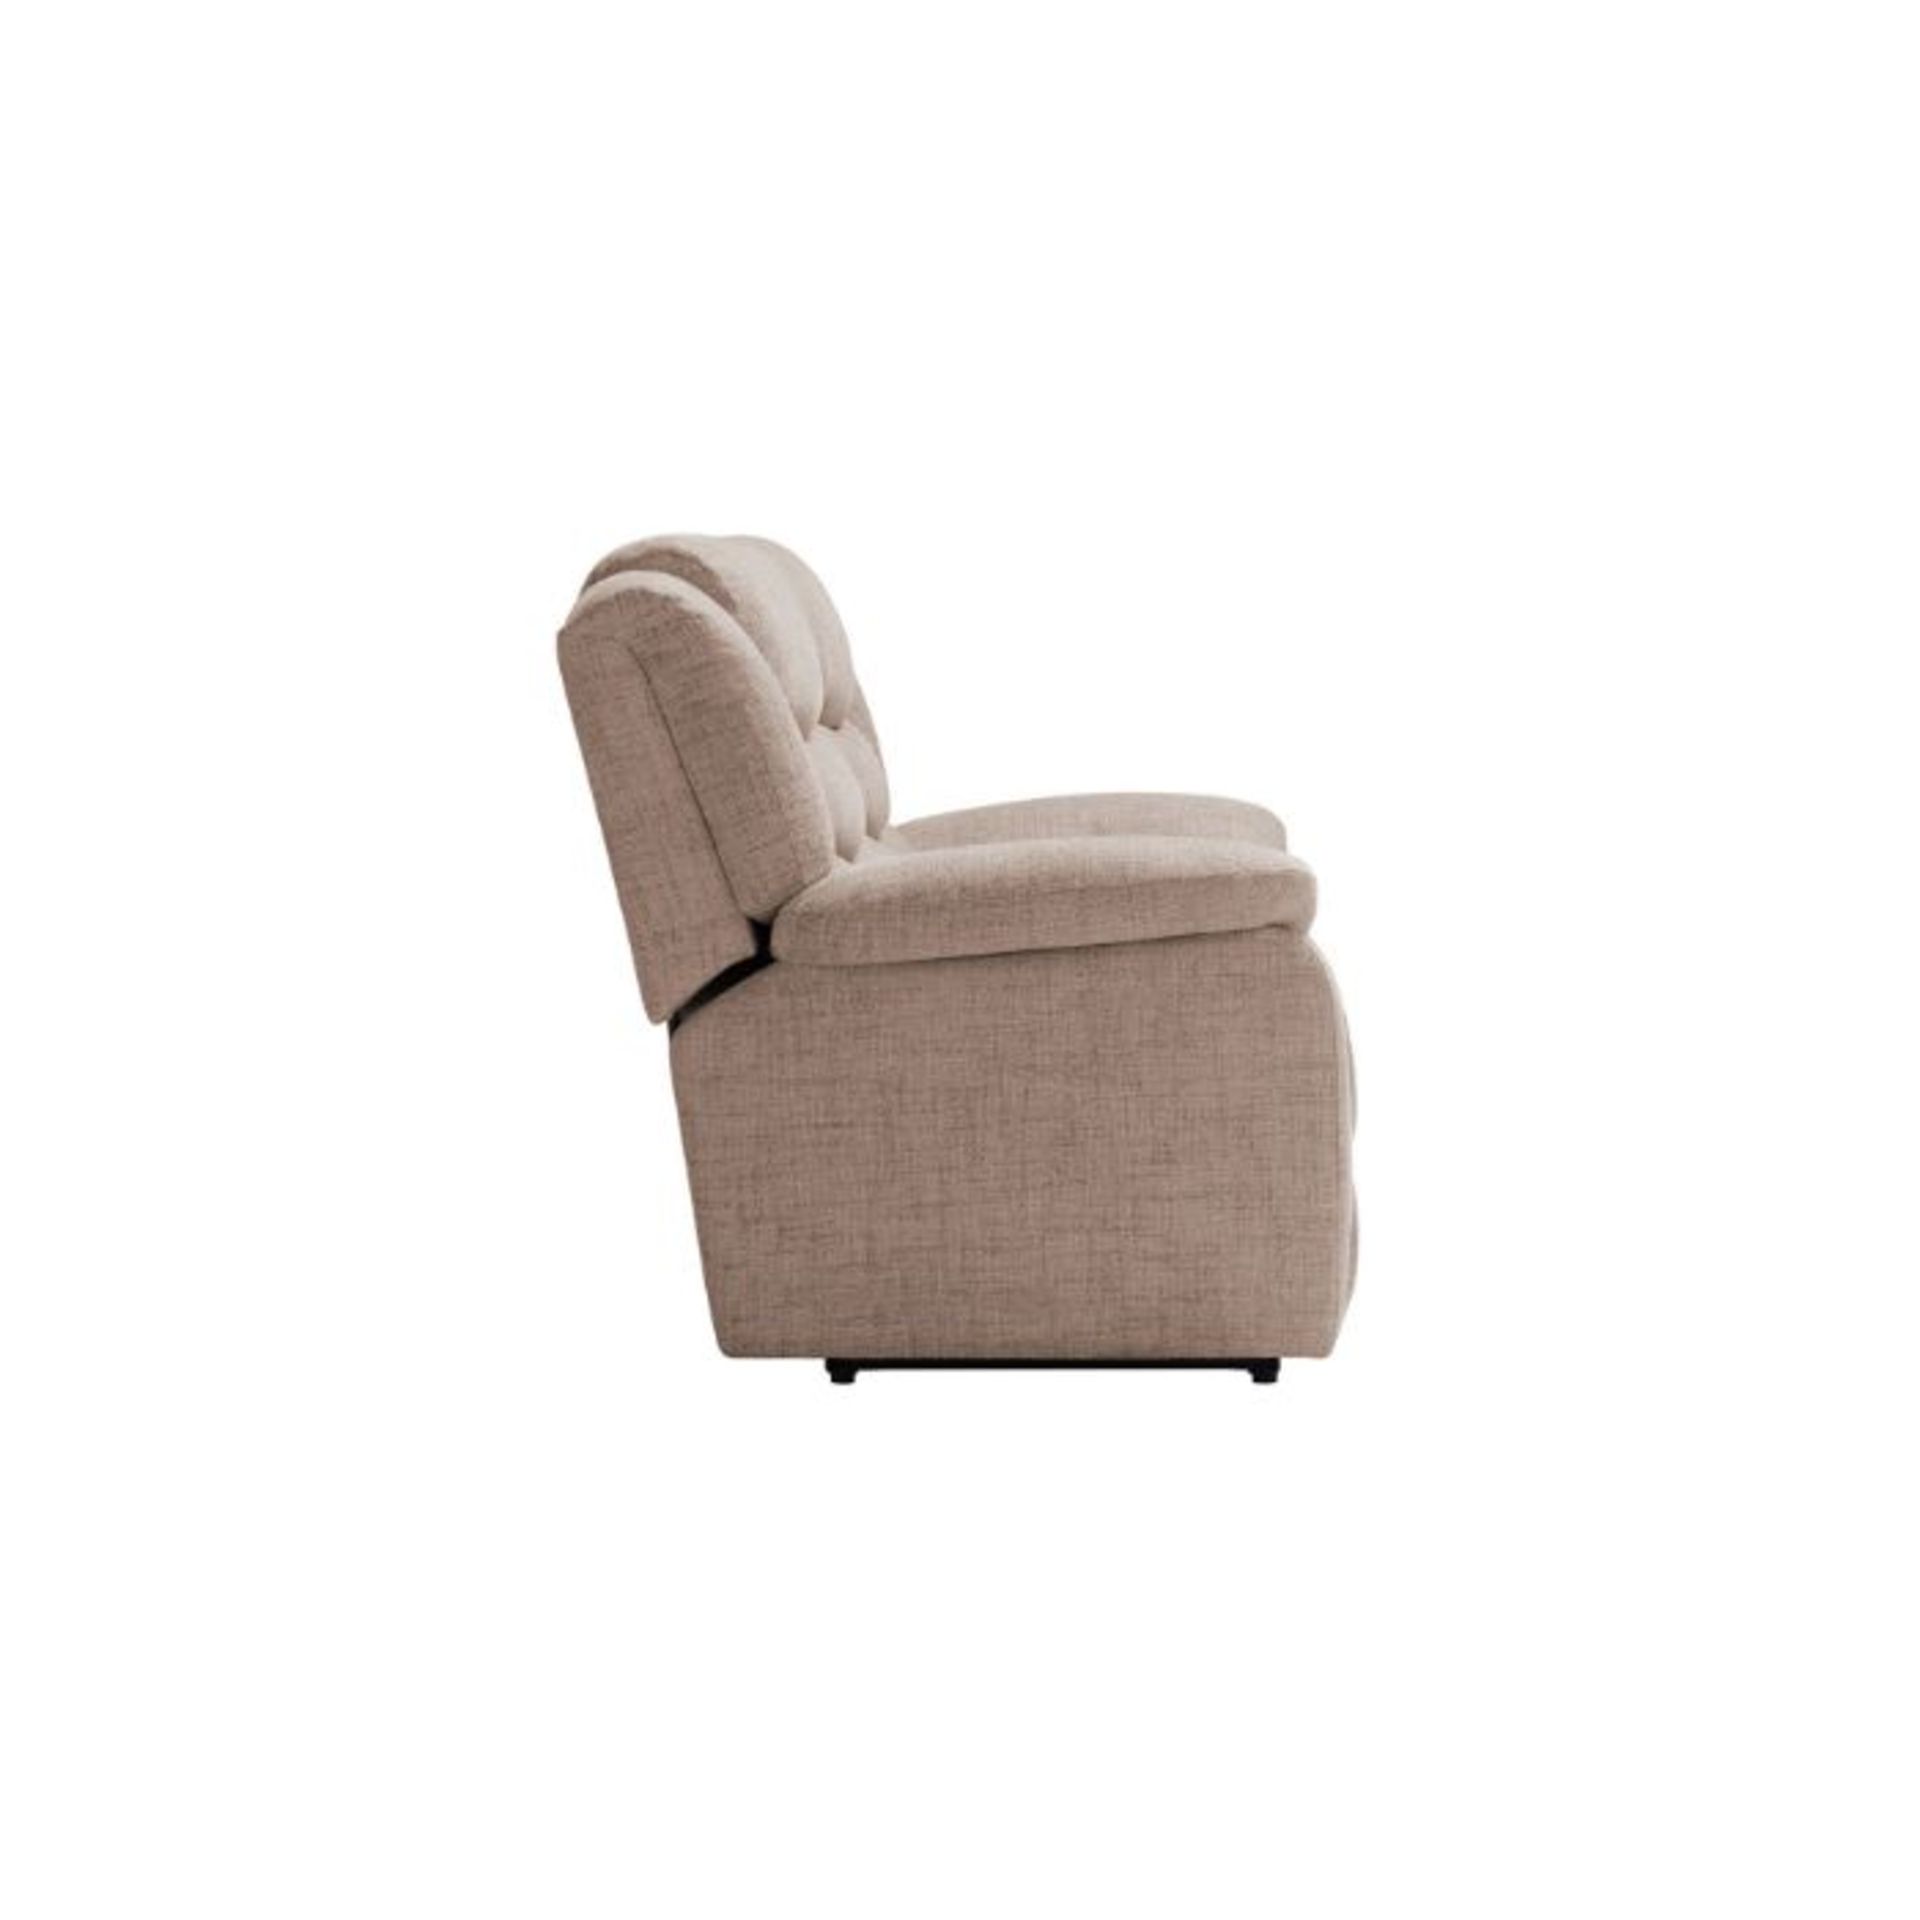 Oak Furnitureland Marlow 2 Seater Sofa In Dorset Beige Fabric RRP ?849.99 Our Marlow range is - Image 3 of 4